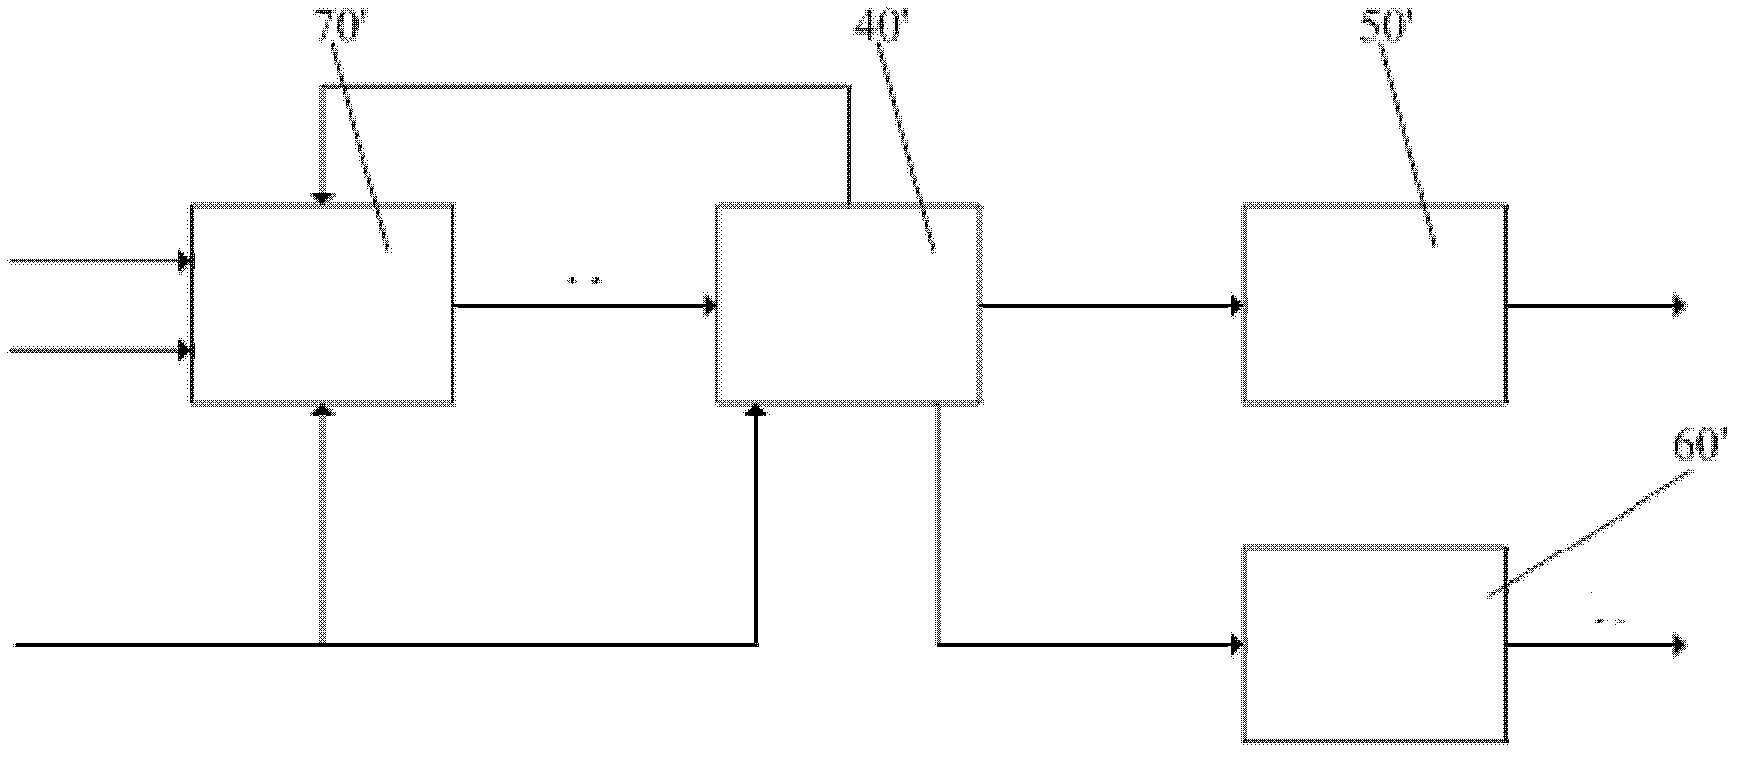 Heat exchange system and heat exchange method